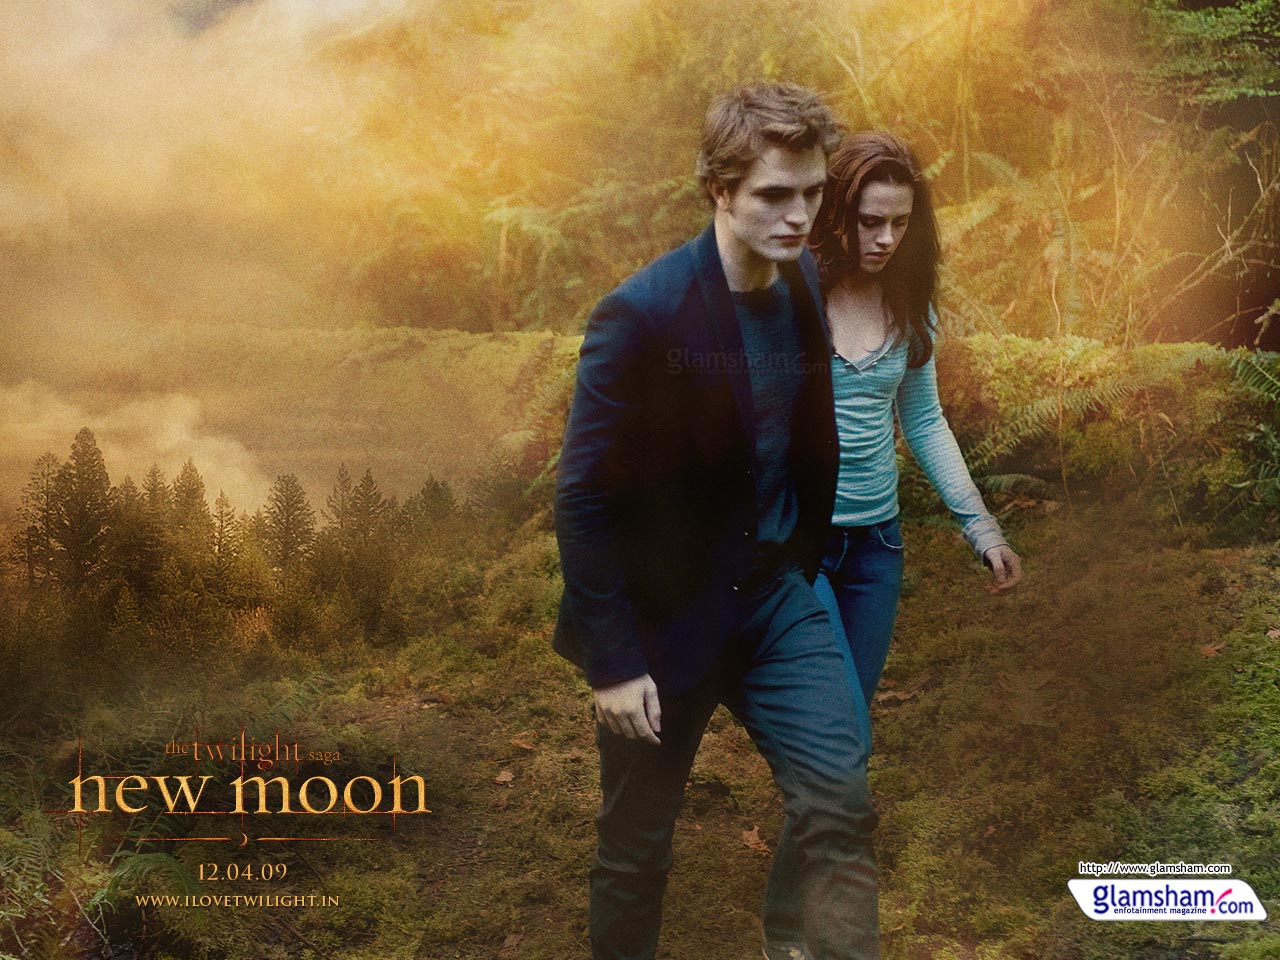 The Twilight Saga - New Moon movie wallpaper 21318 - Glamsham